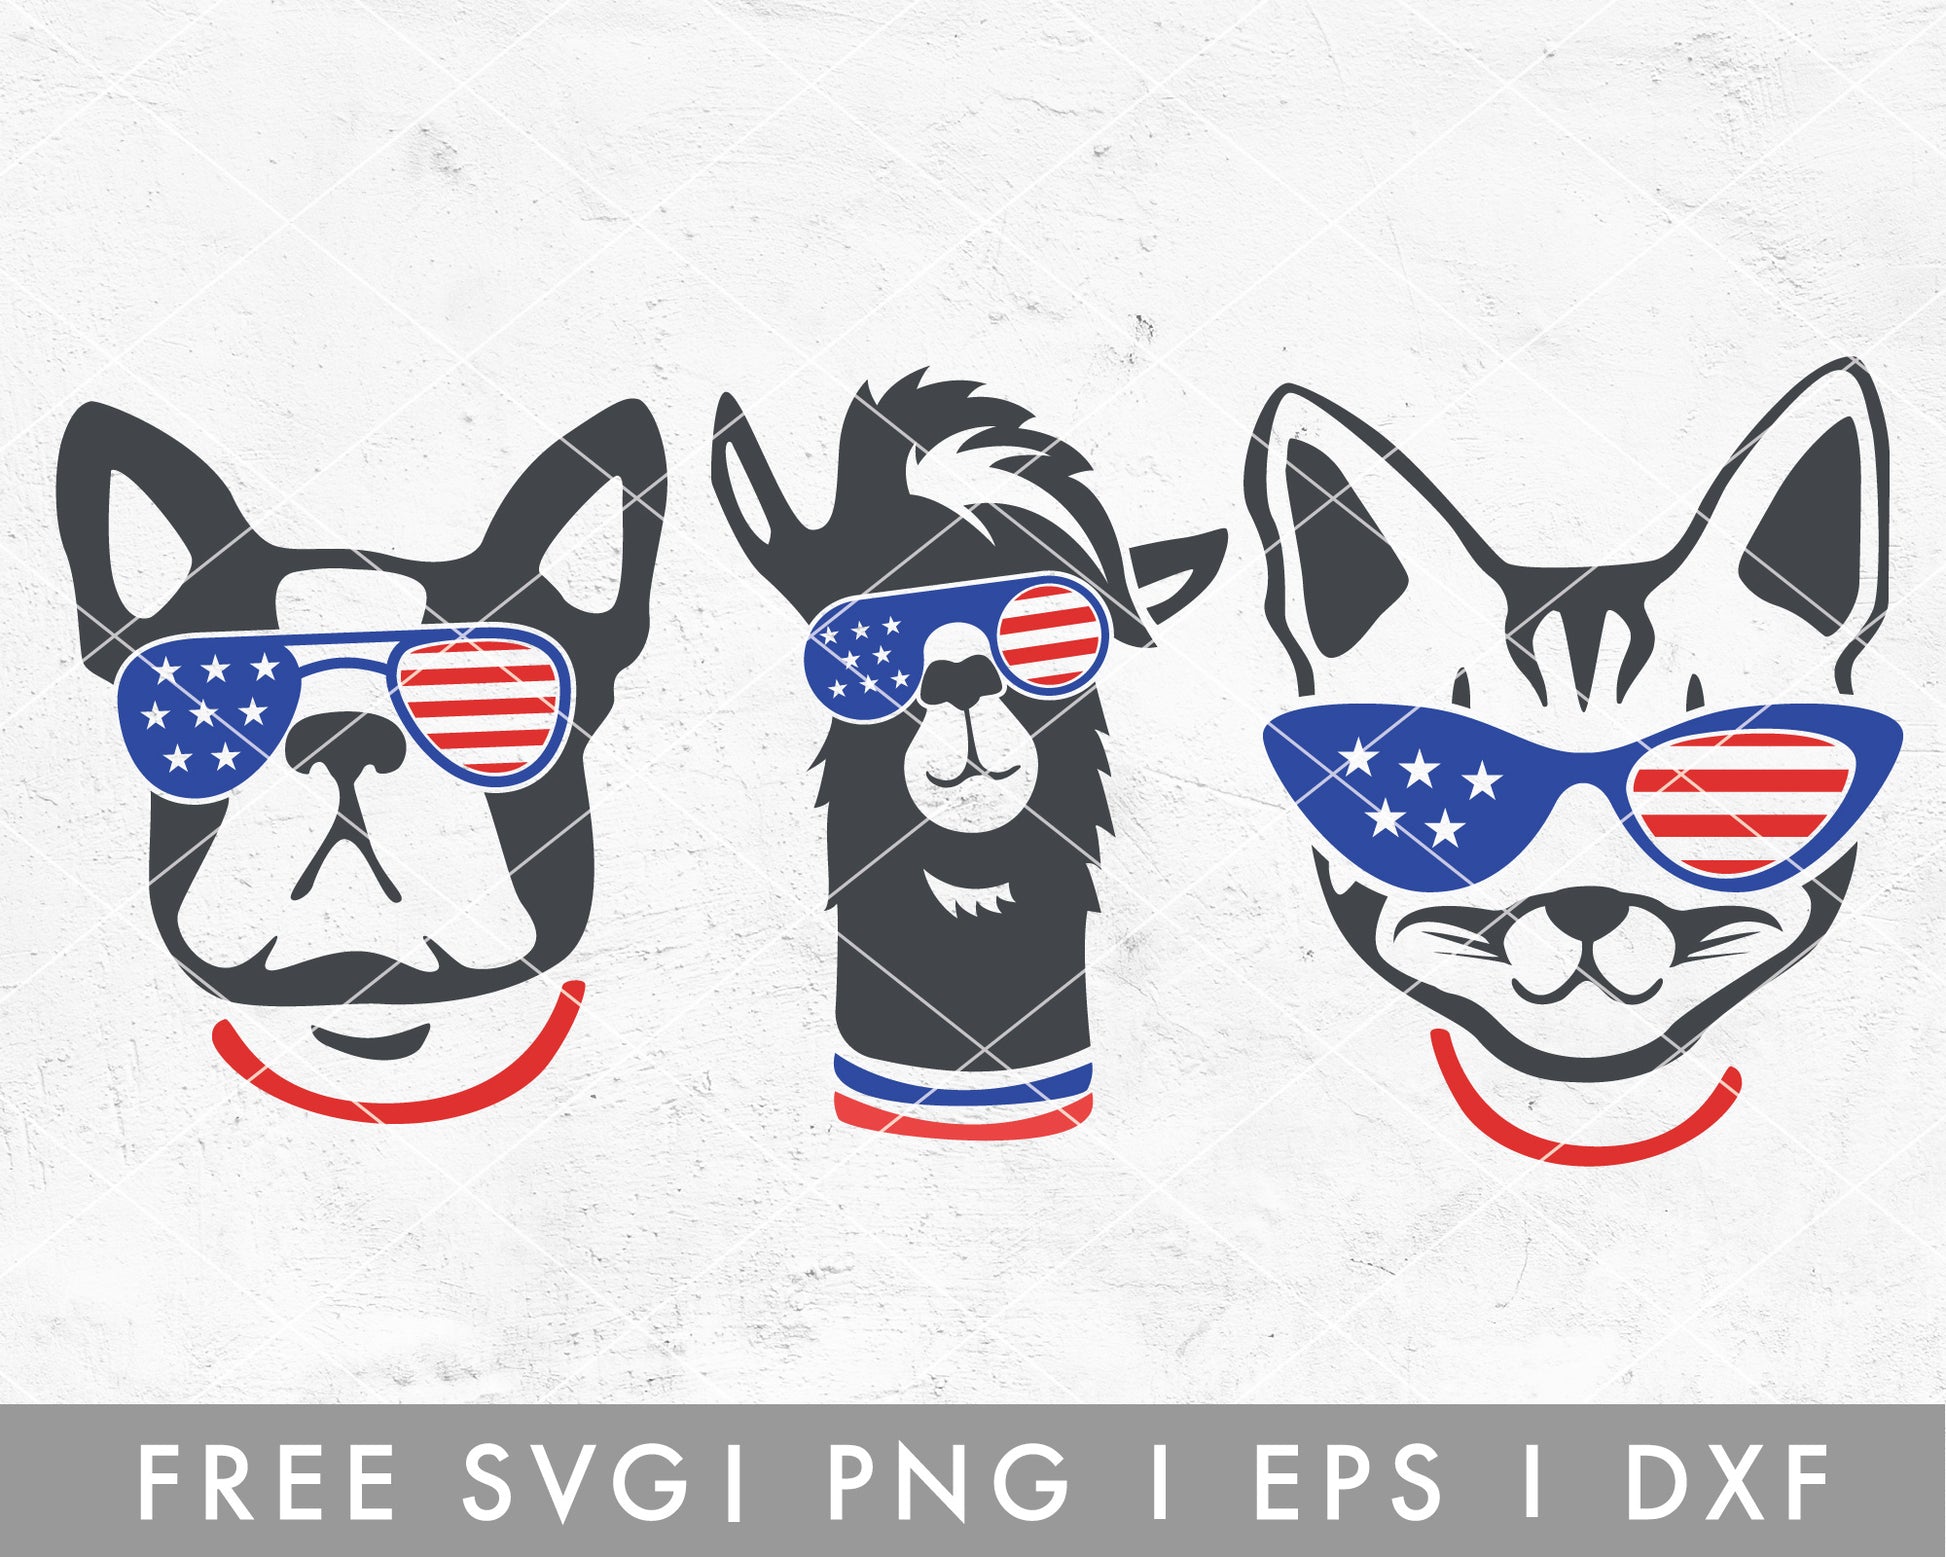 FREE FREE Animal Face SVG | USA SVG Cut File for Cricut, Cameo Silhouette | Free SVG Cut File